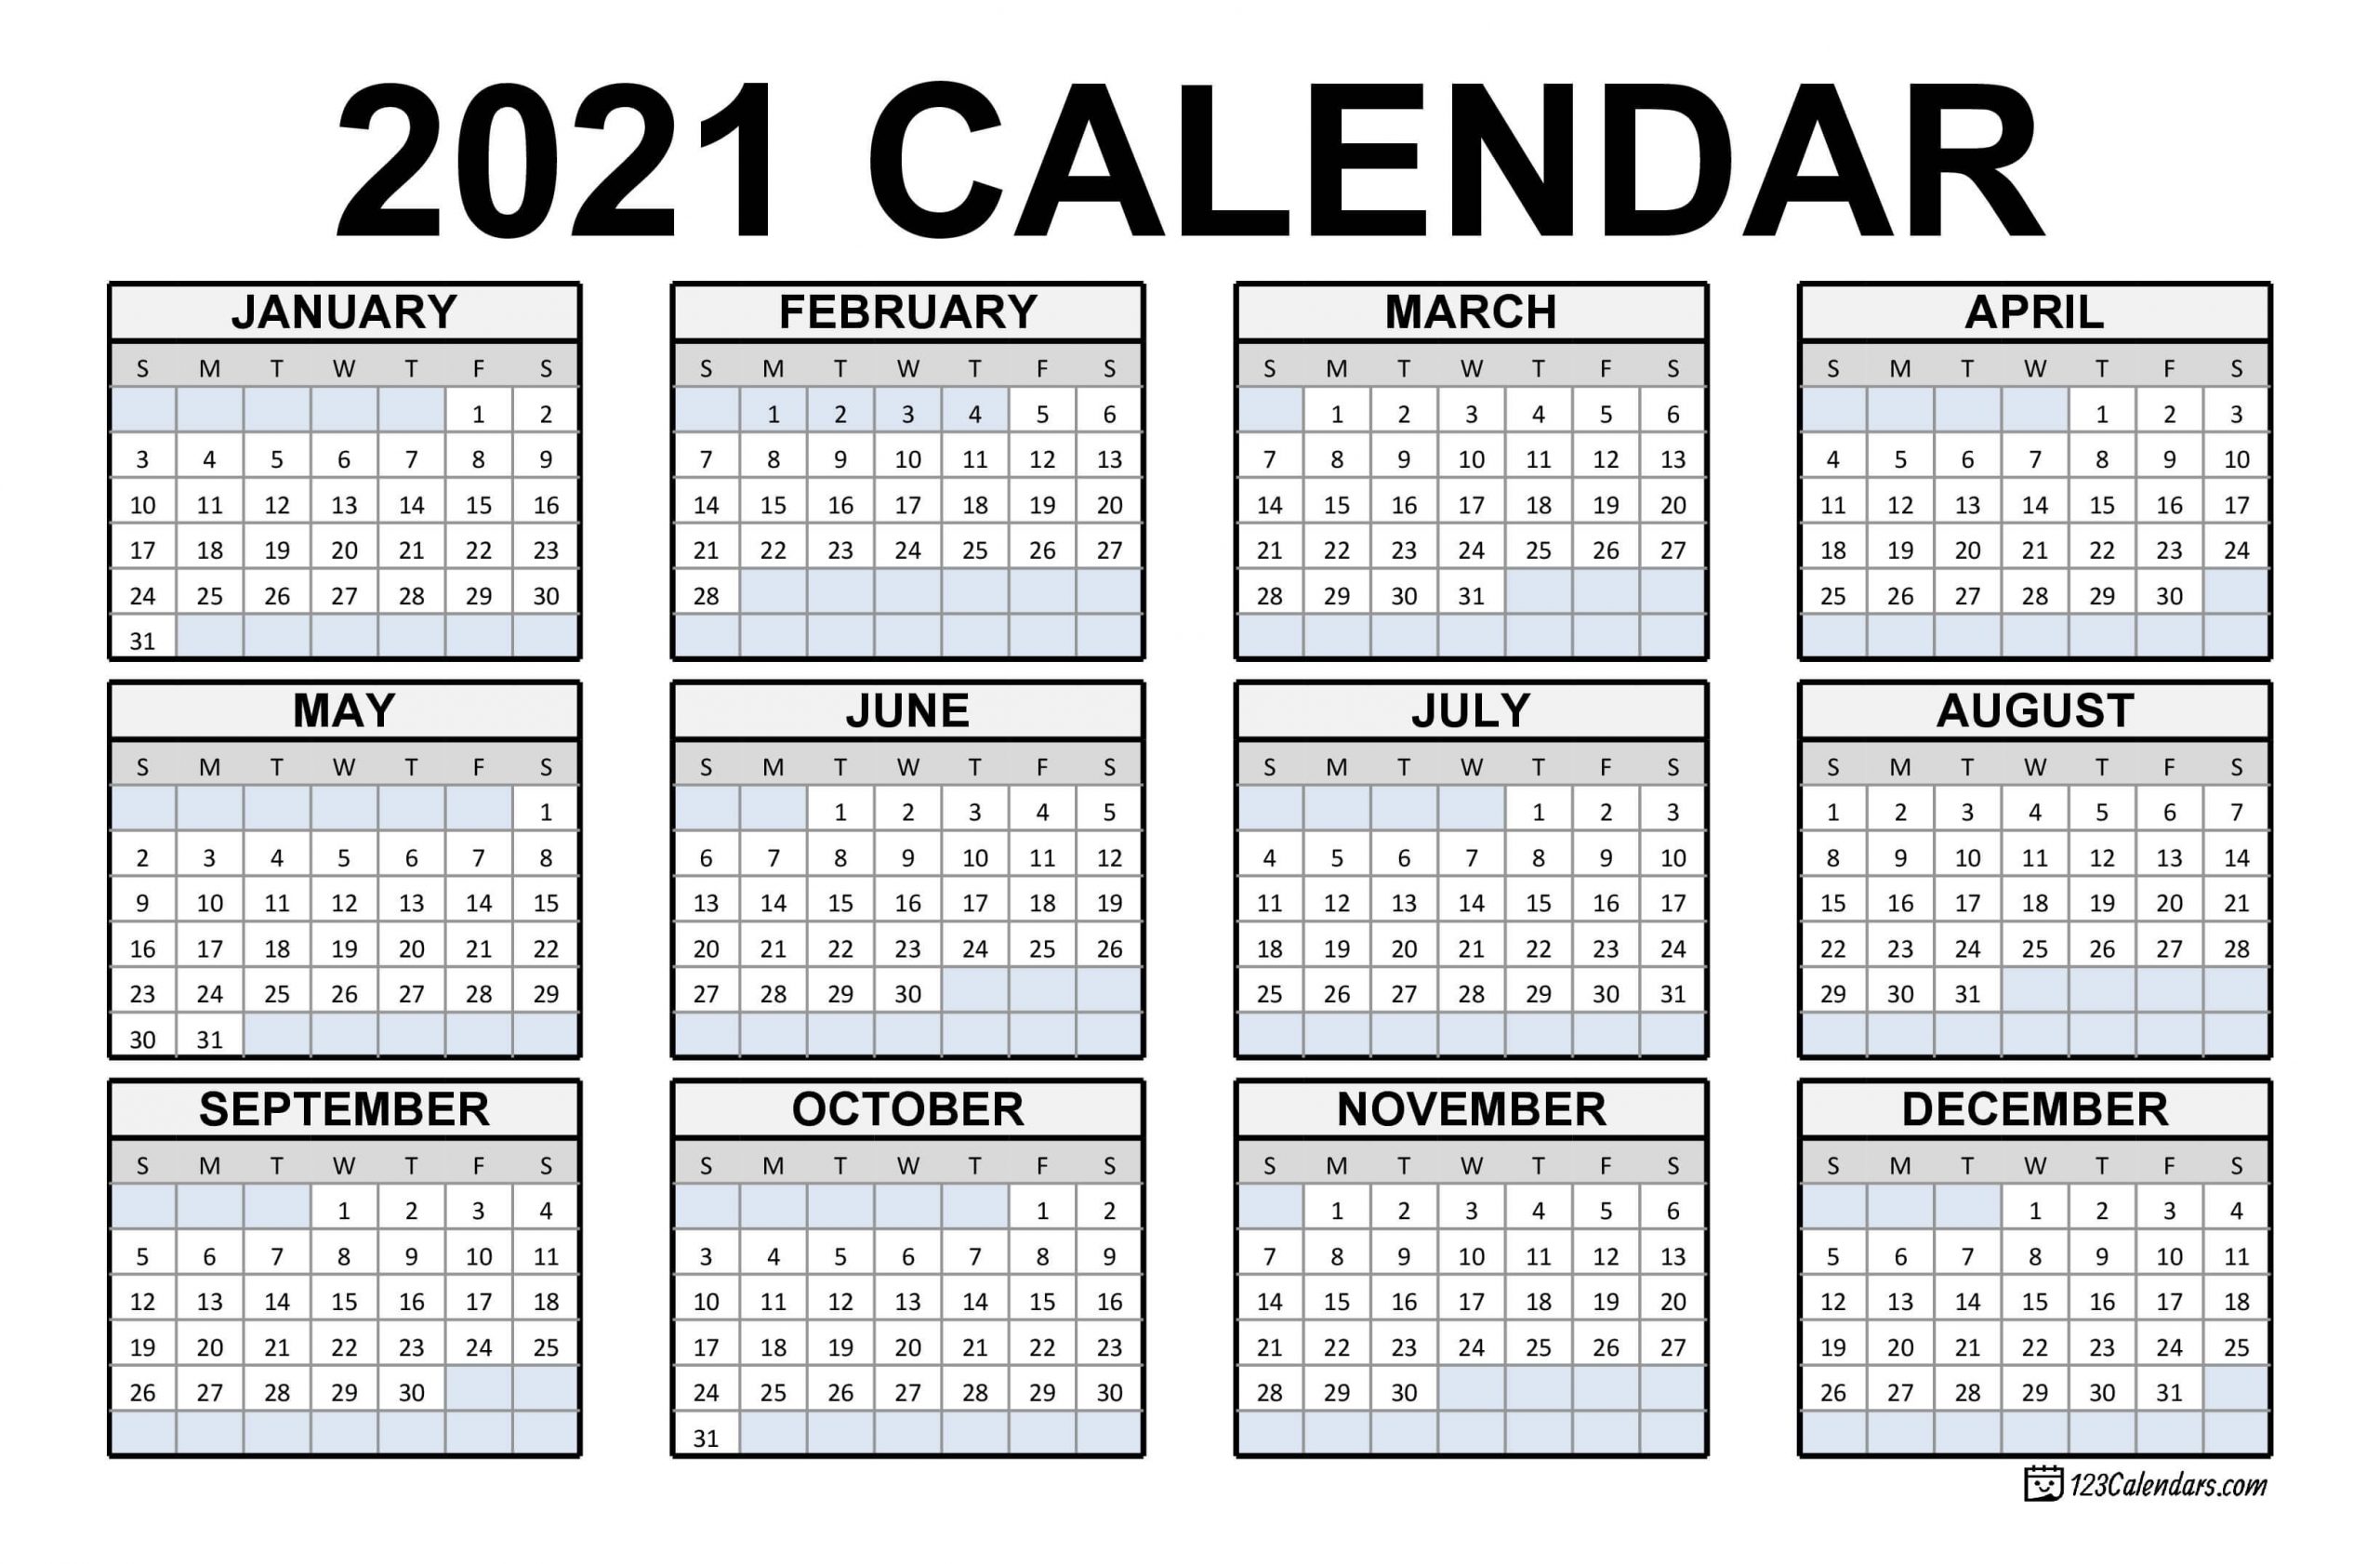 2021 Printable Calendar | 123Calendars-Print Philippine 2021 Calendars With Holiday